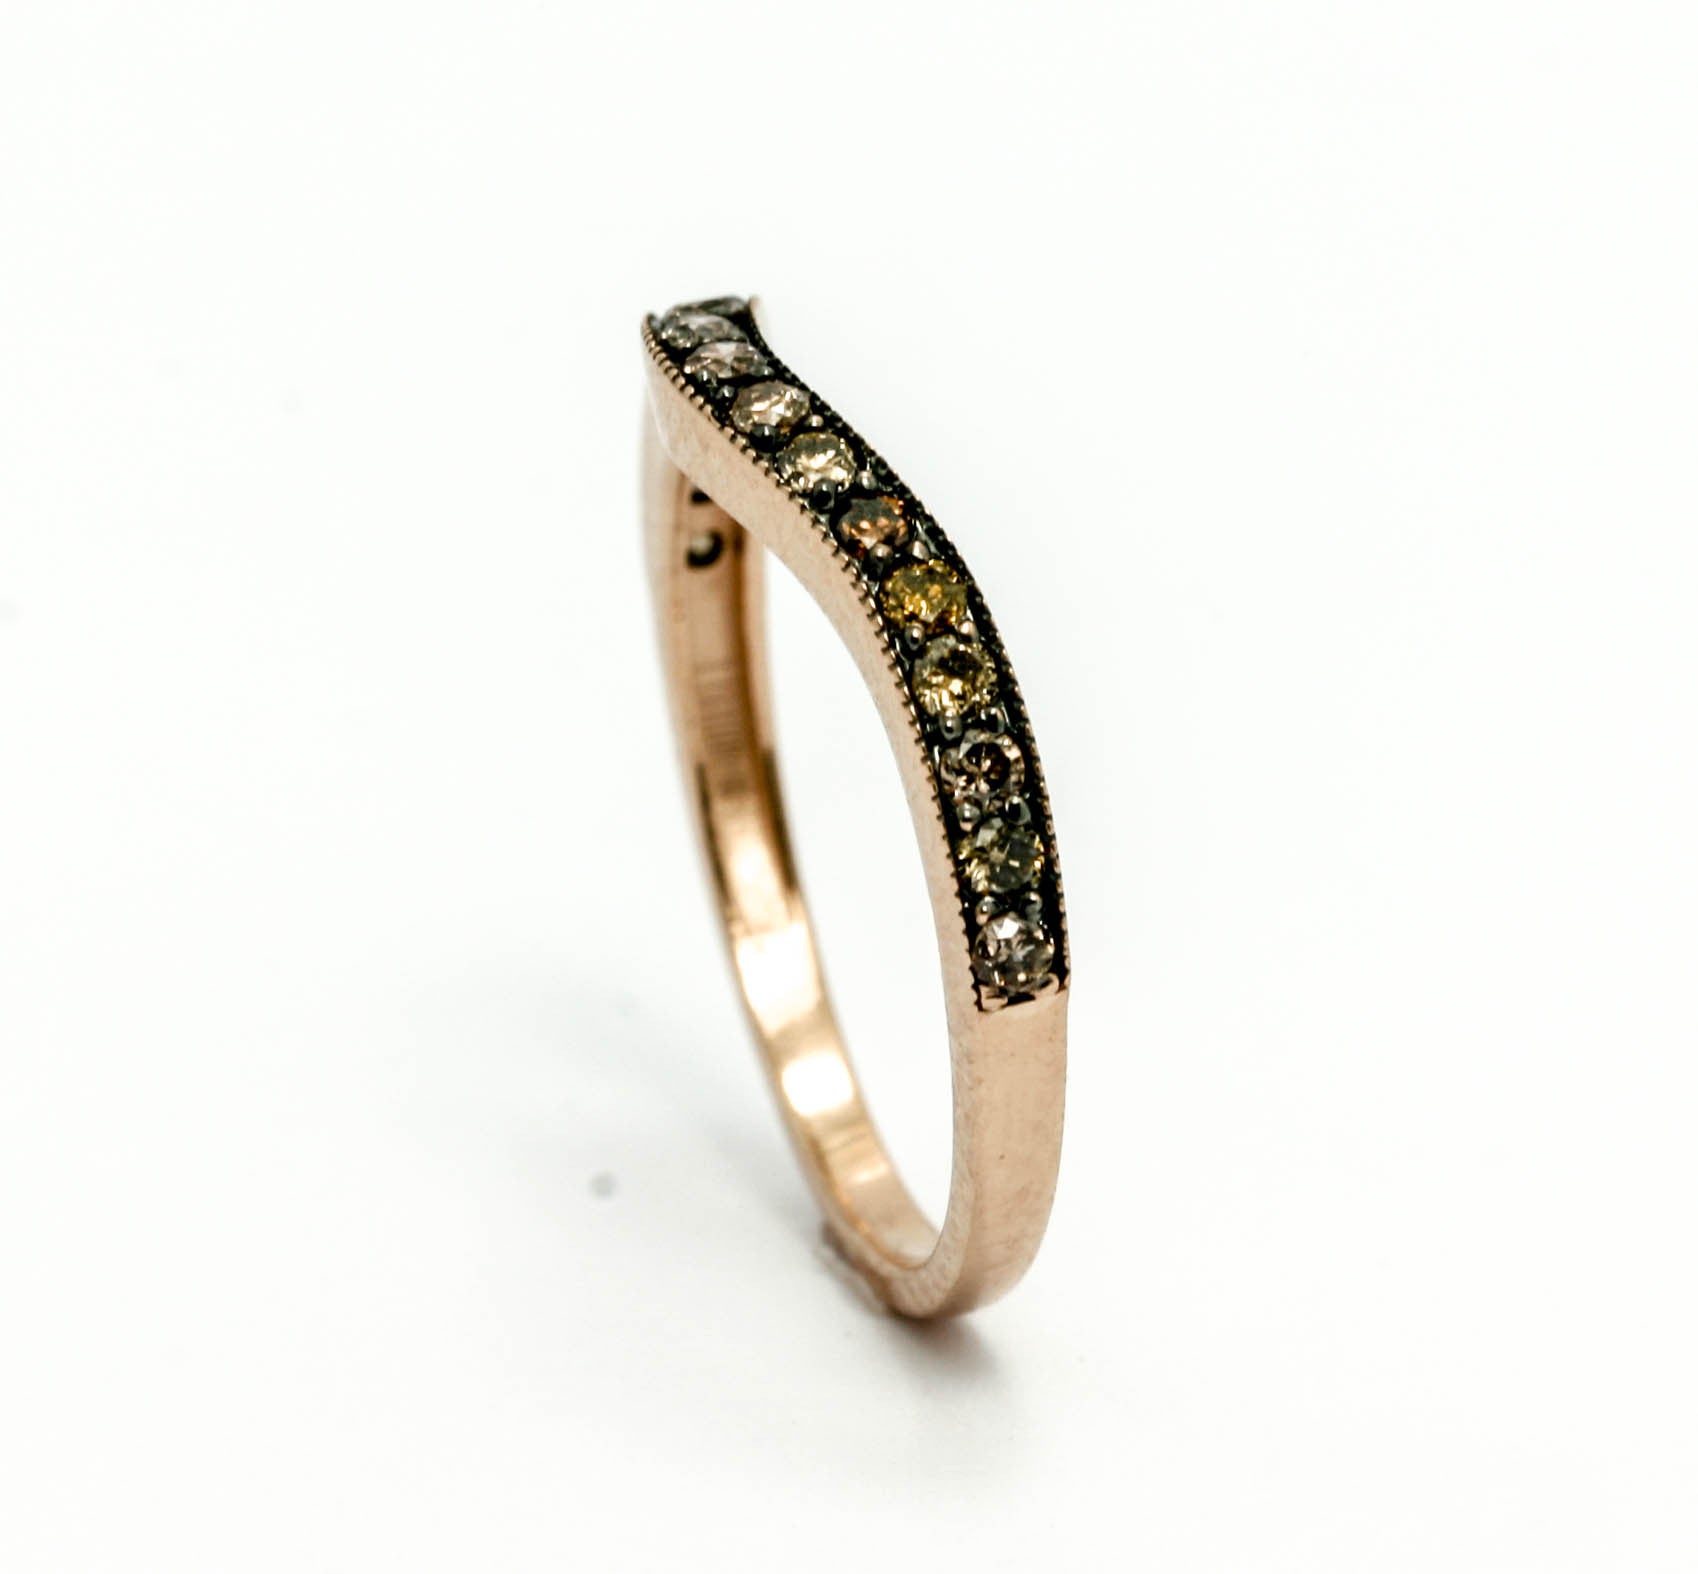 Moissanite Engagement Ring, Unique 1 Carat Floating Halo Rose Gold, White & Fancy Color Brown Diamonds, Forever Brilliant Moissanite. - FB94641